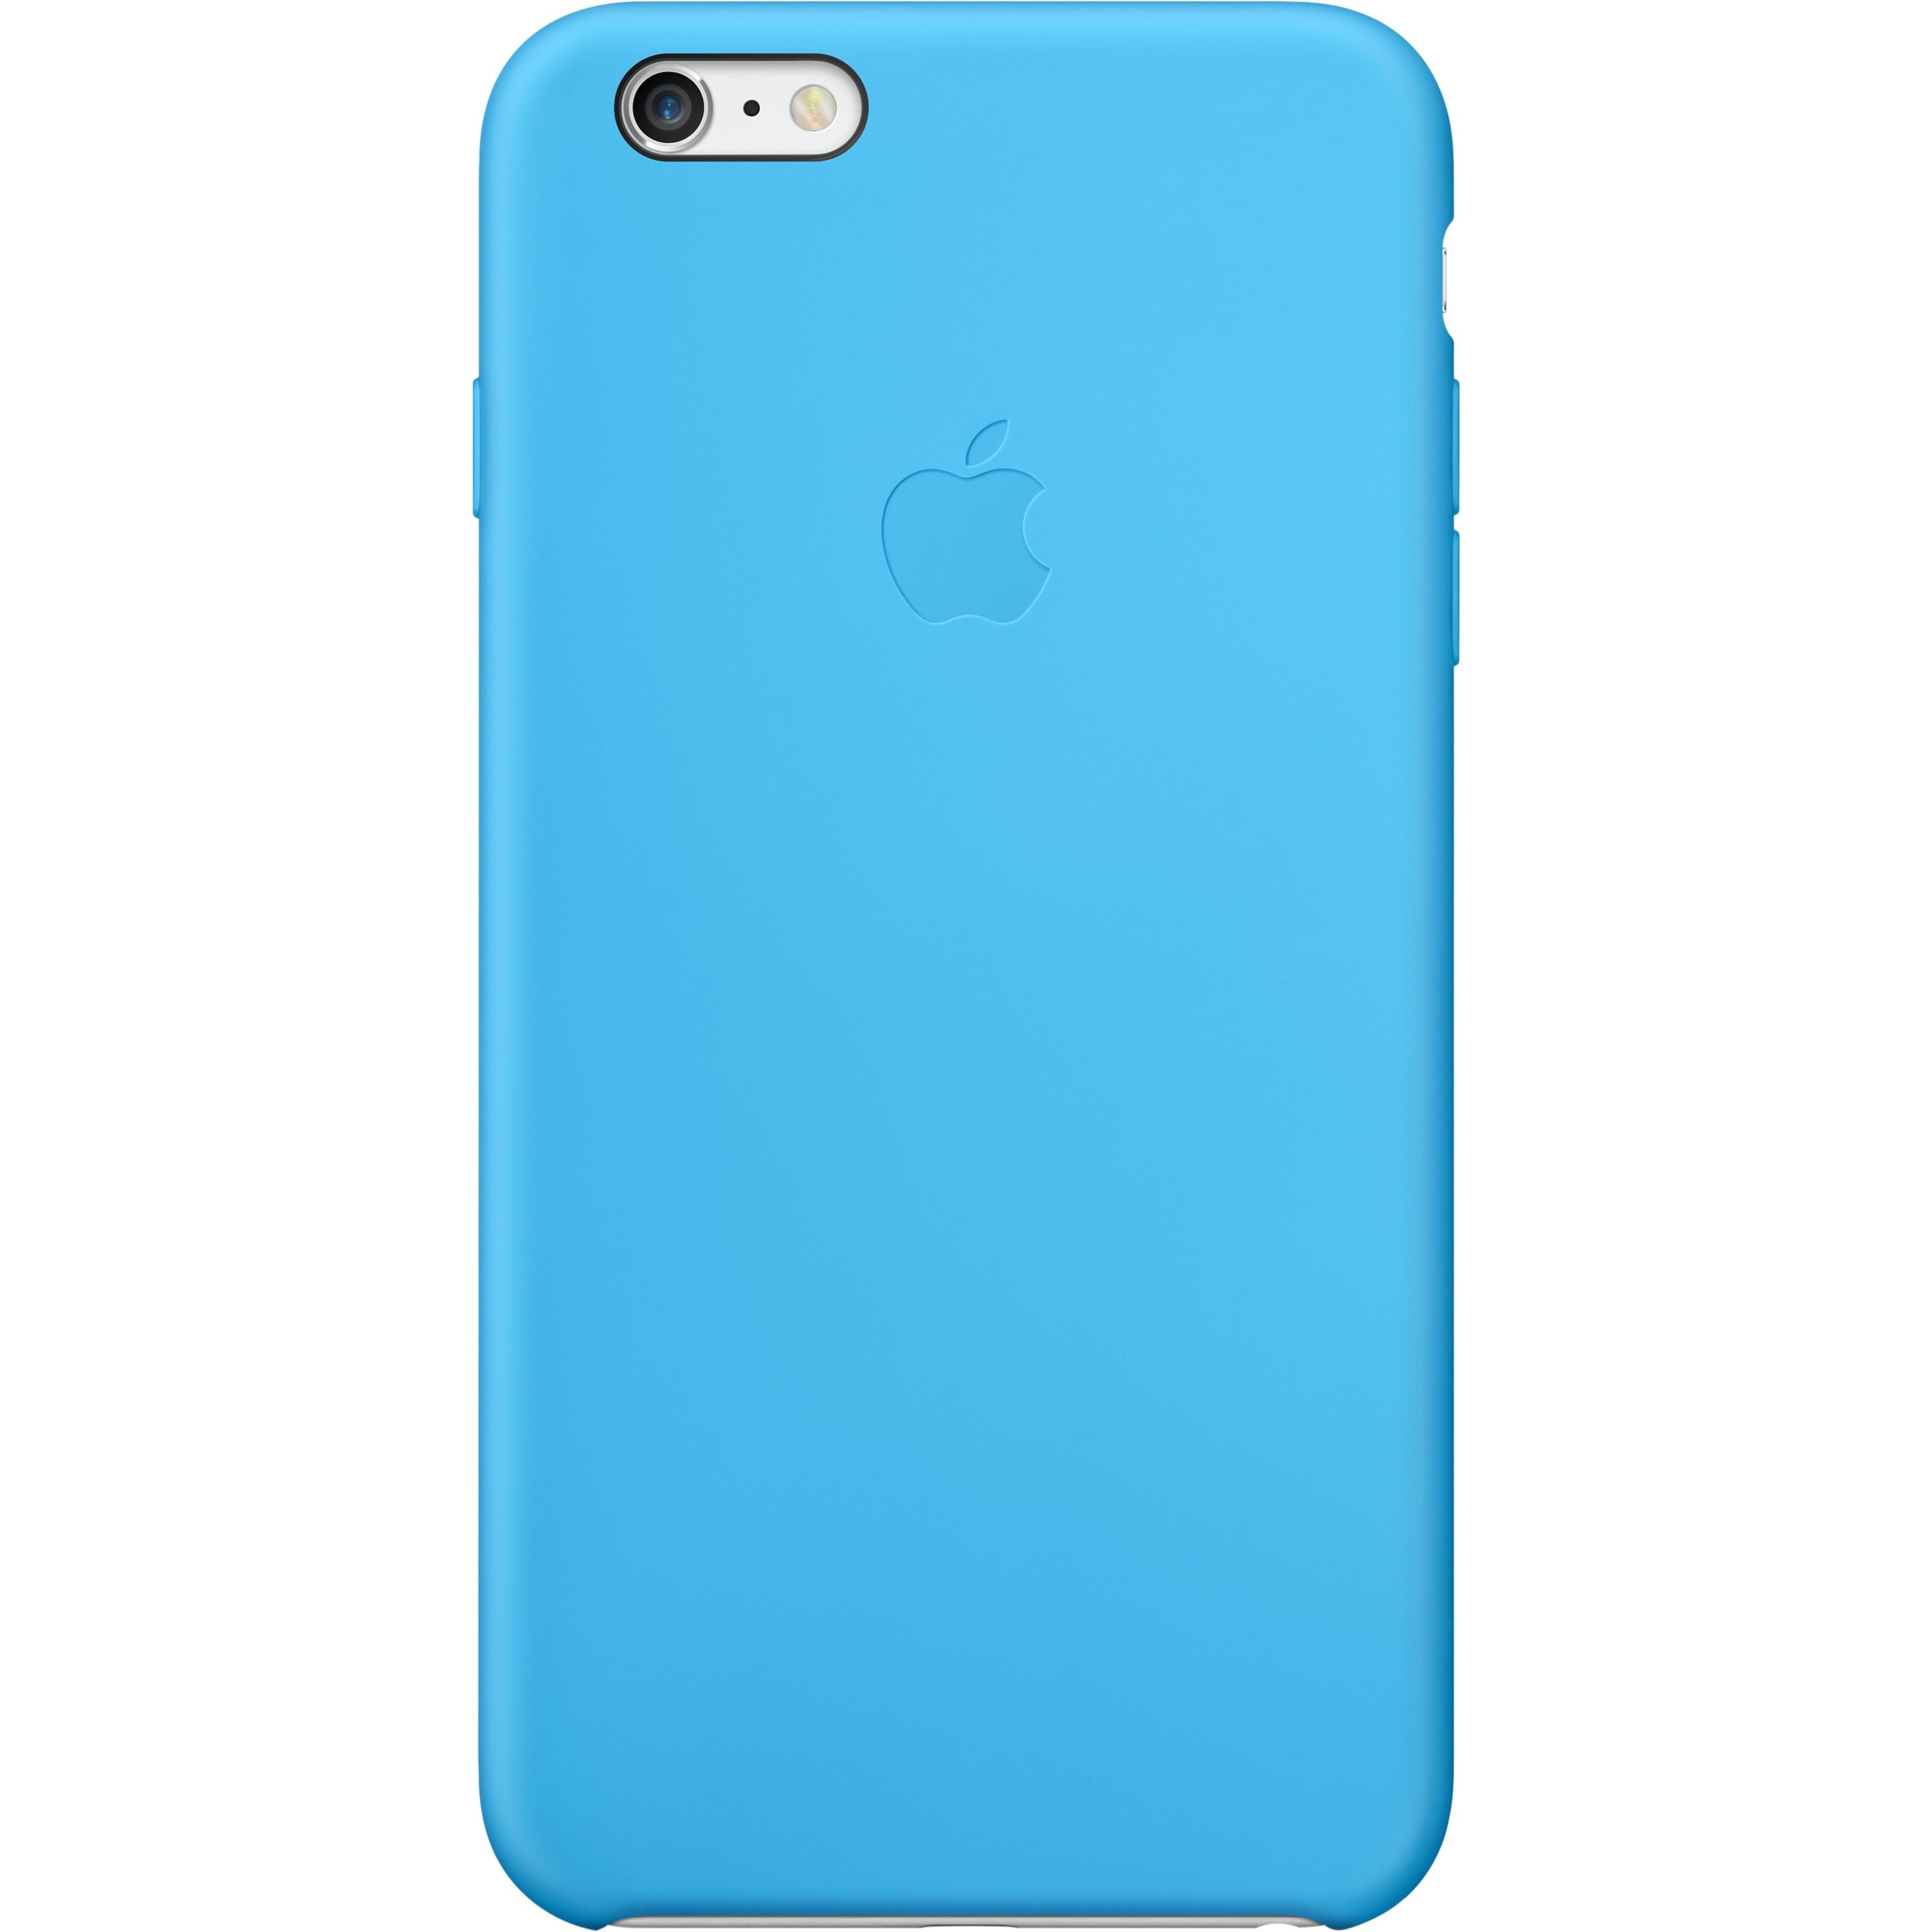 Brig Korea neef Apple iPhone 6 Plus Silicone Case, Blue - Walmart.com